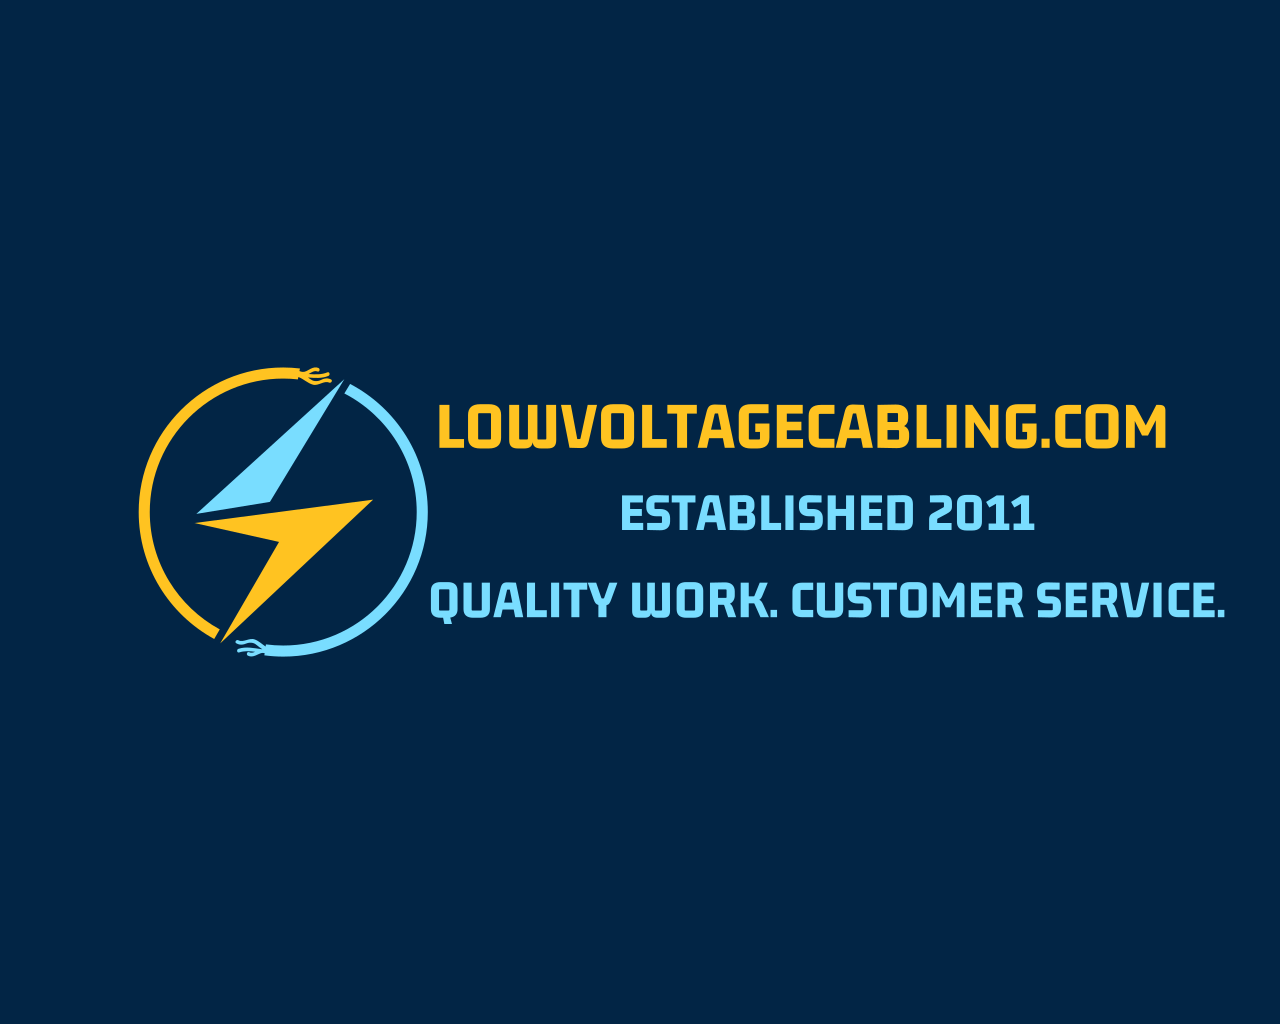 Low Voltage Cabling Logo